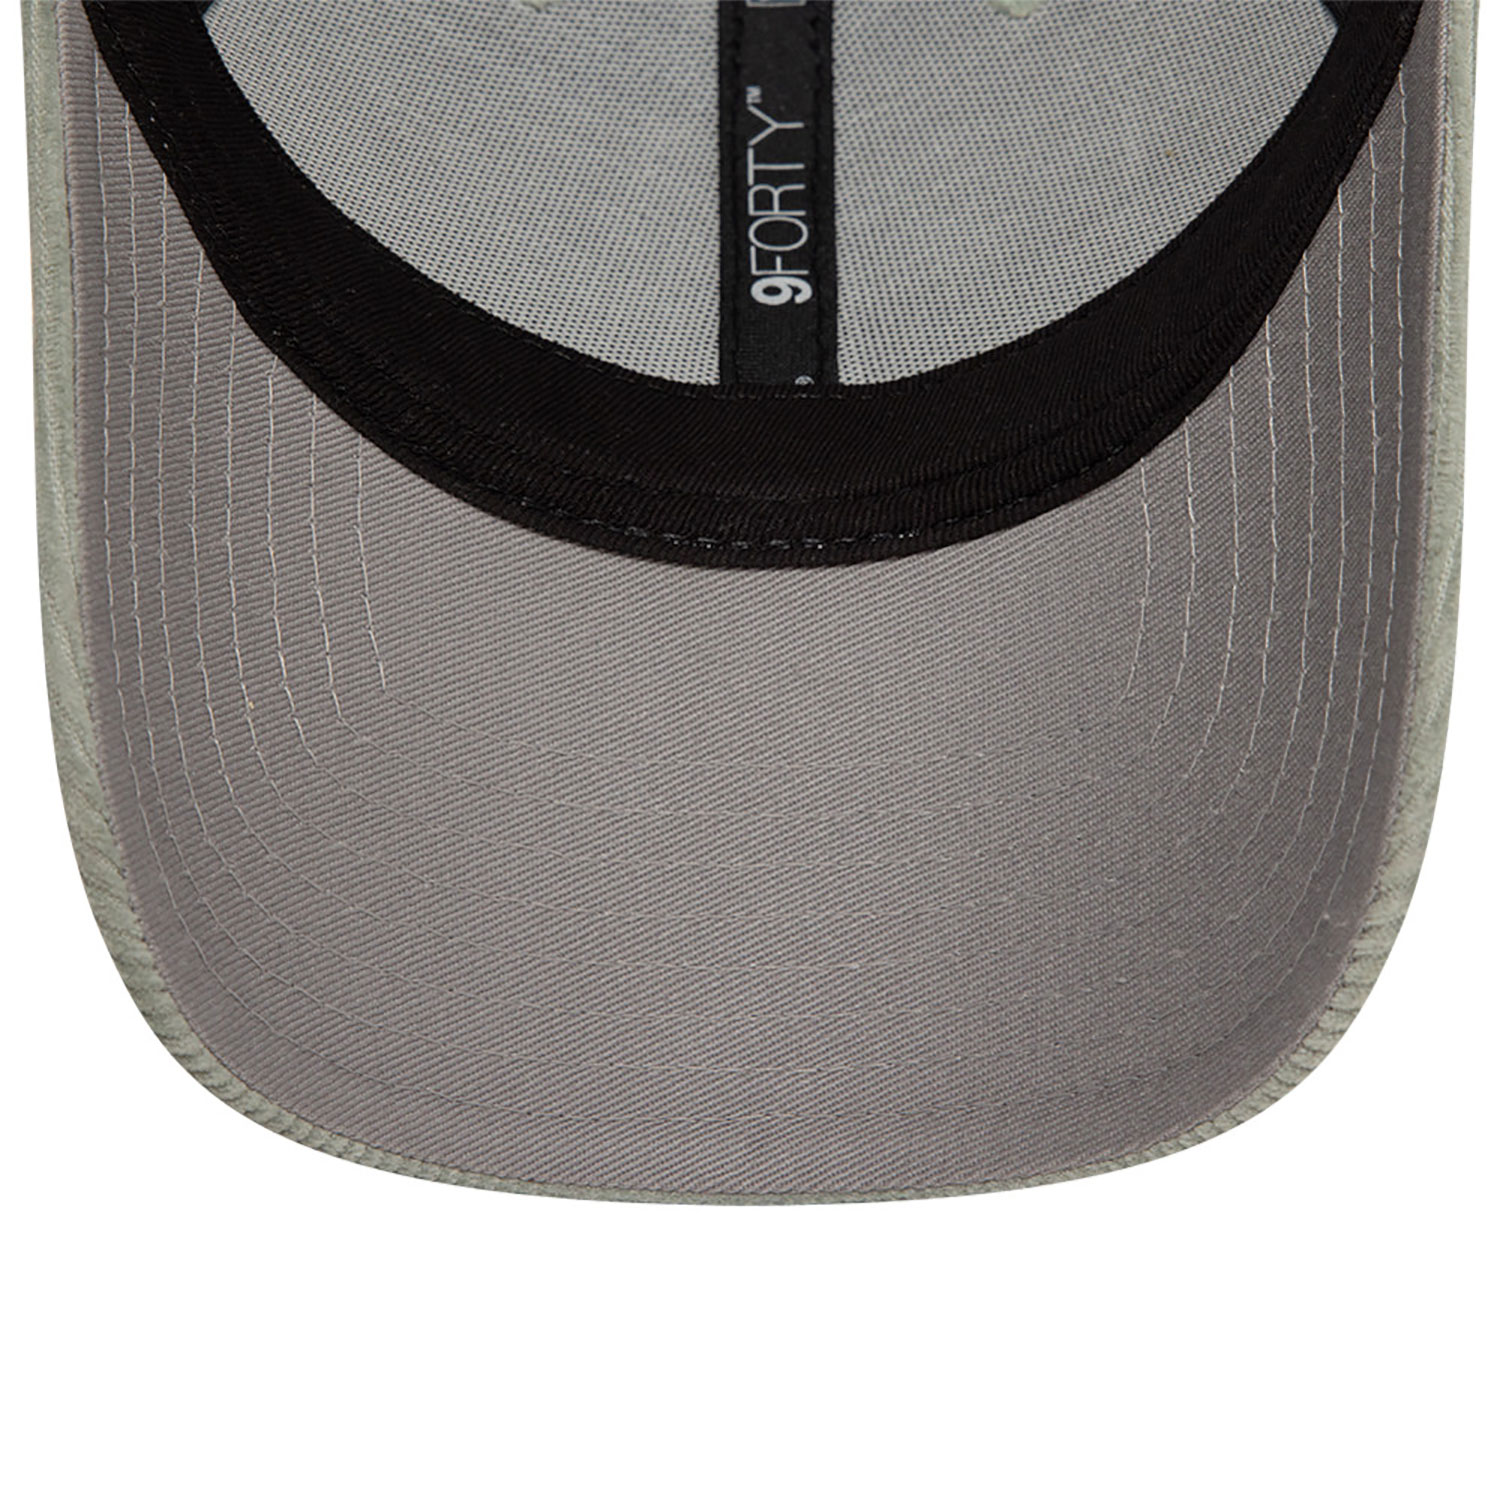 New Era Cord Grey 9FORTY Adjustable Cap